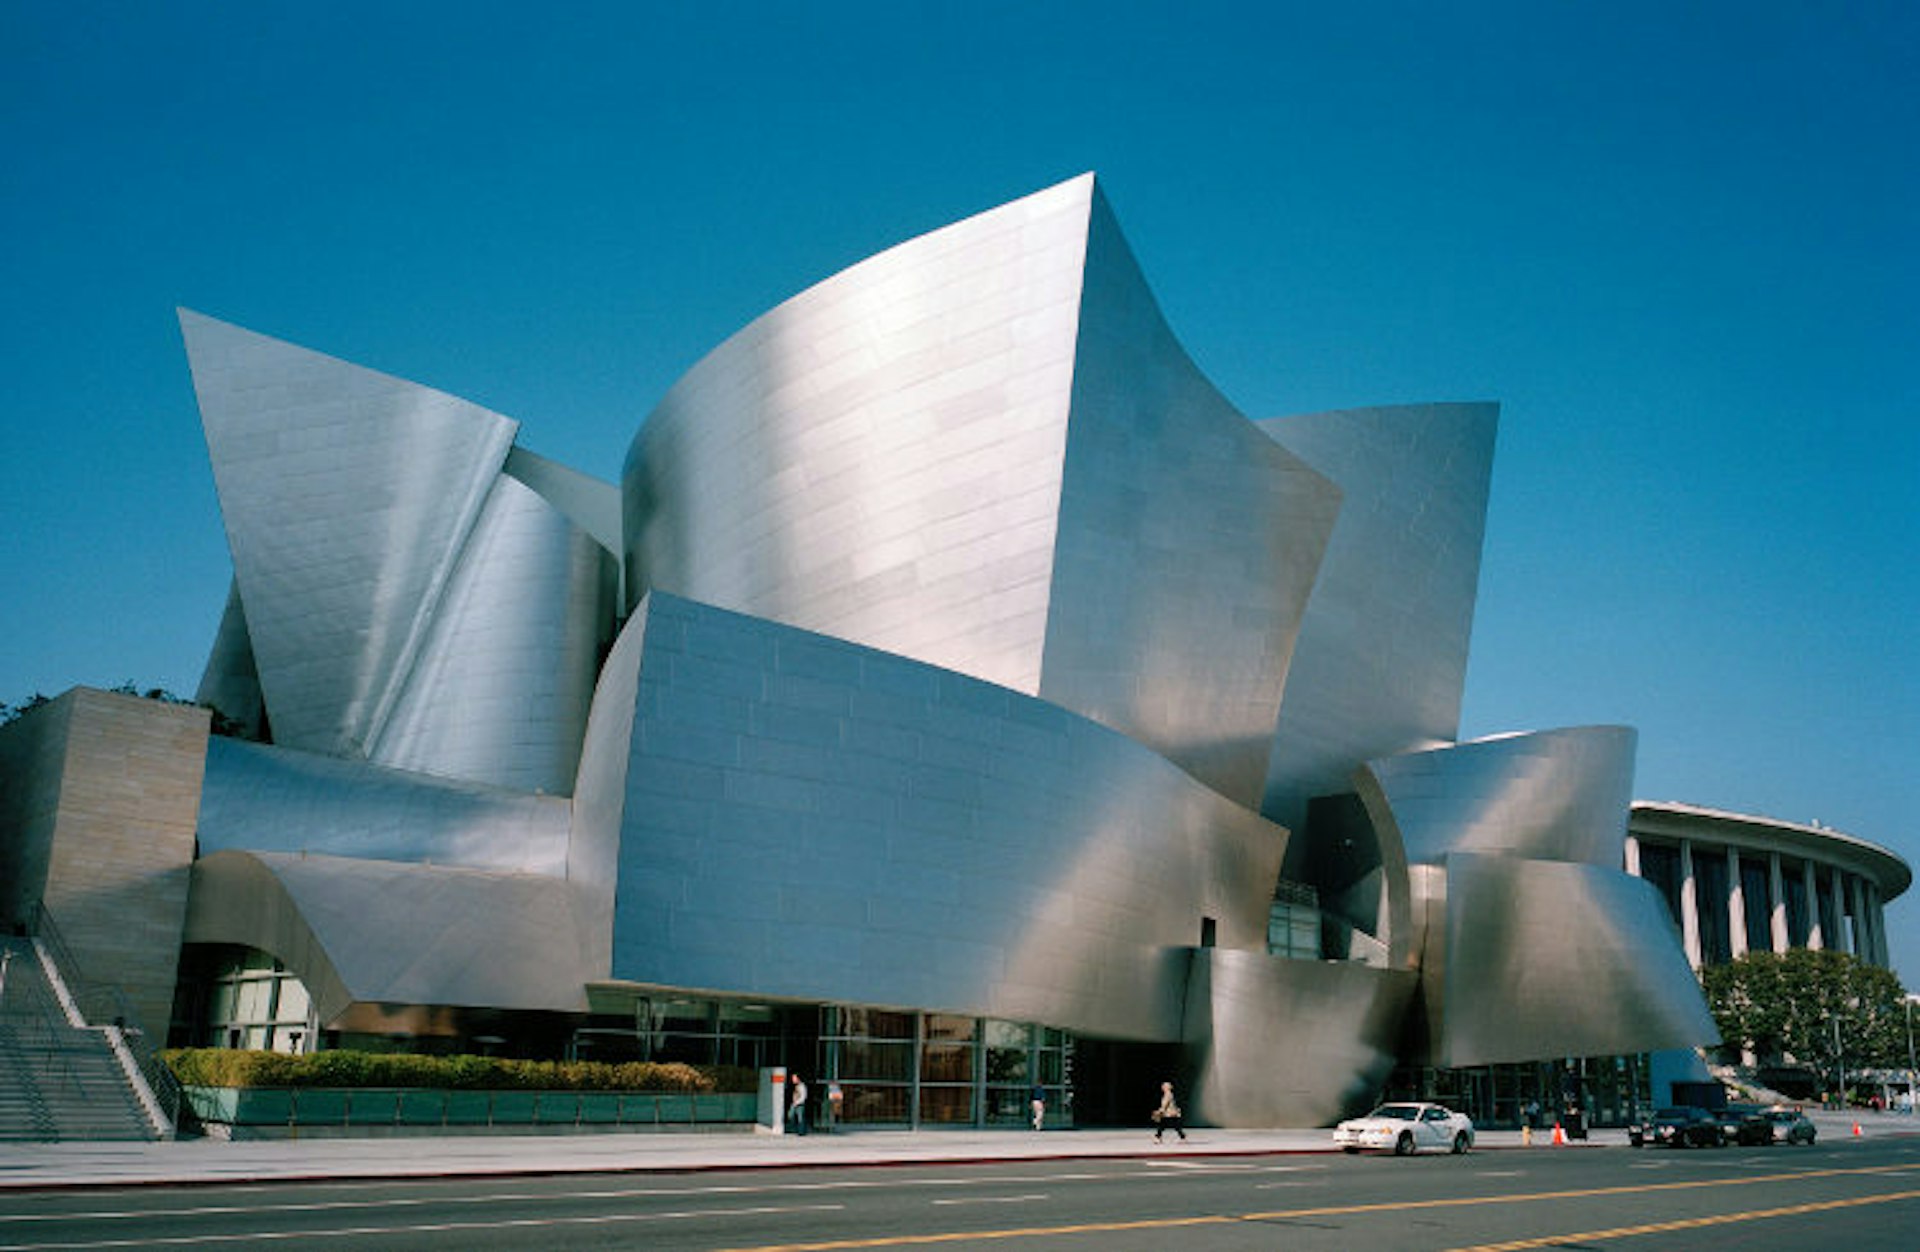 Walt Disney Concert Hall has helped regenerate Downtown Los Angeles. Image by Mark Horn / Getty